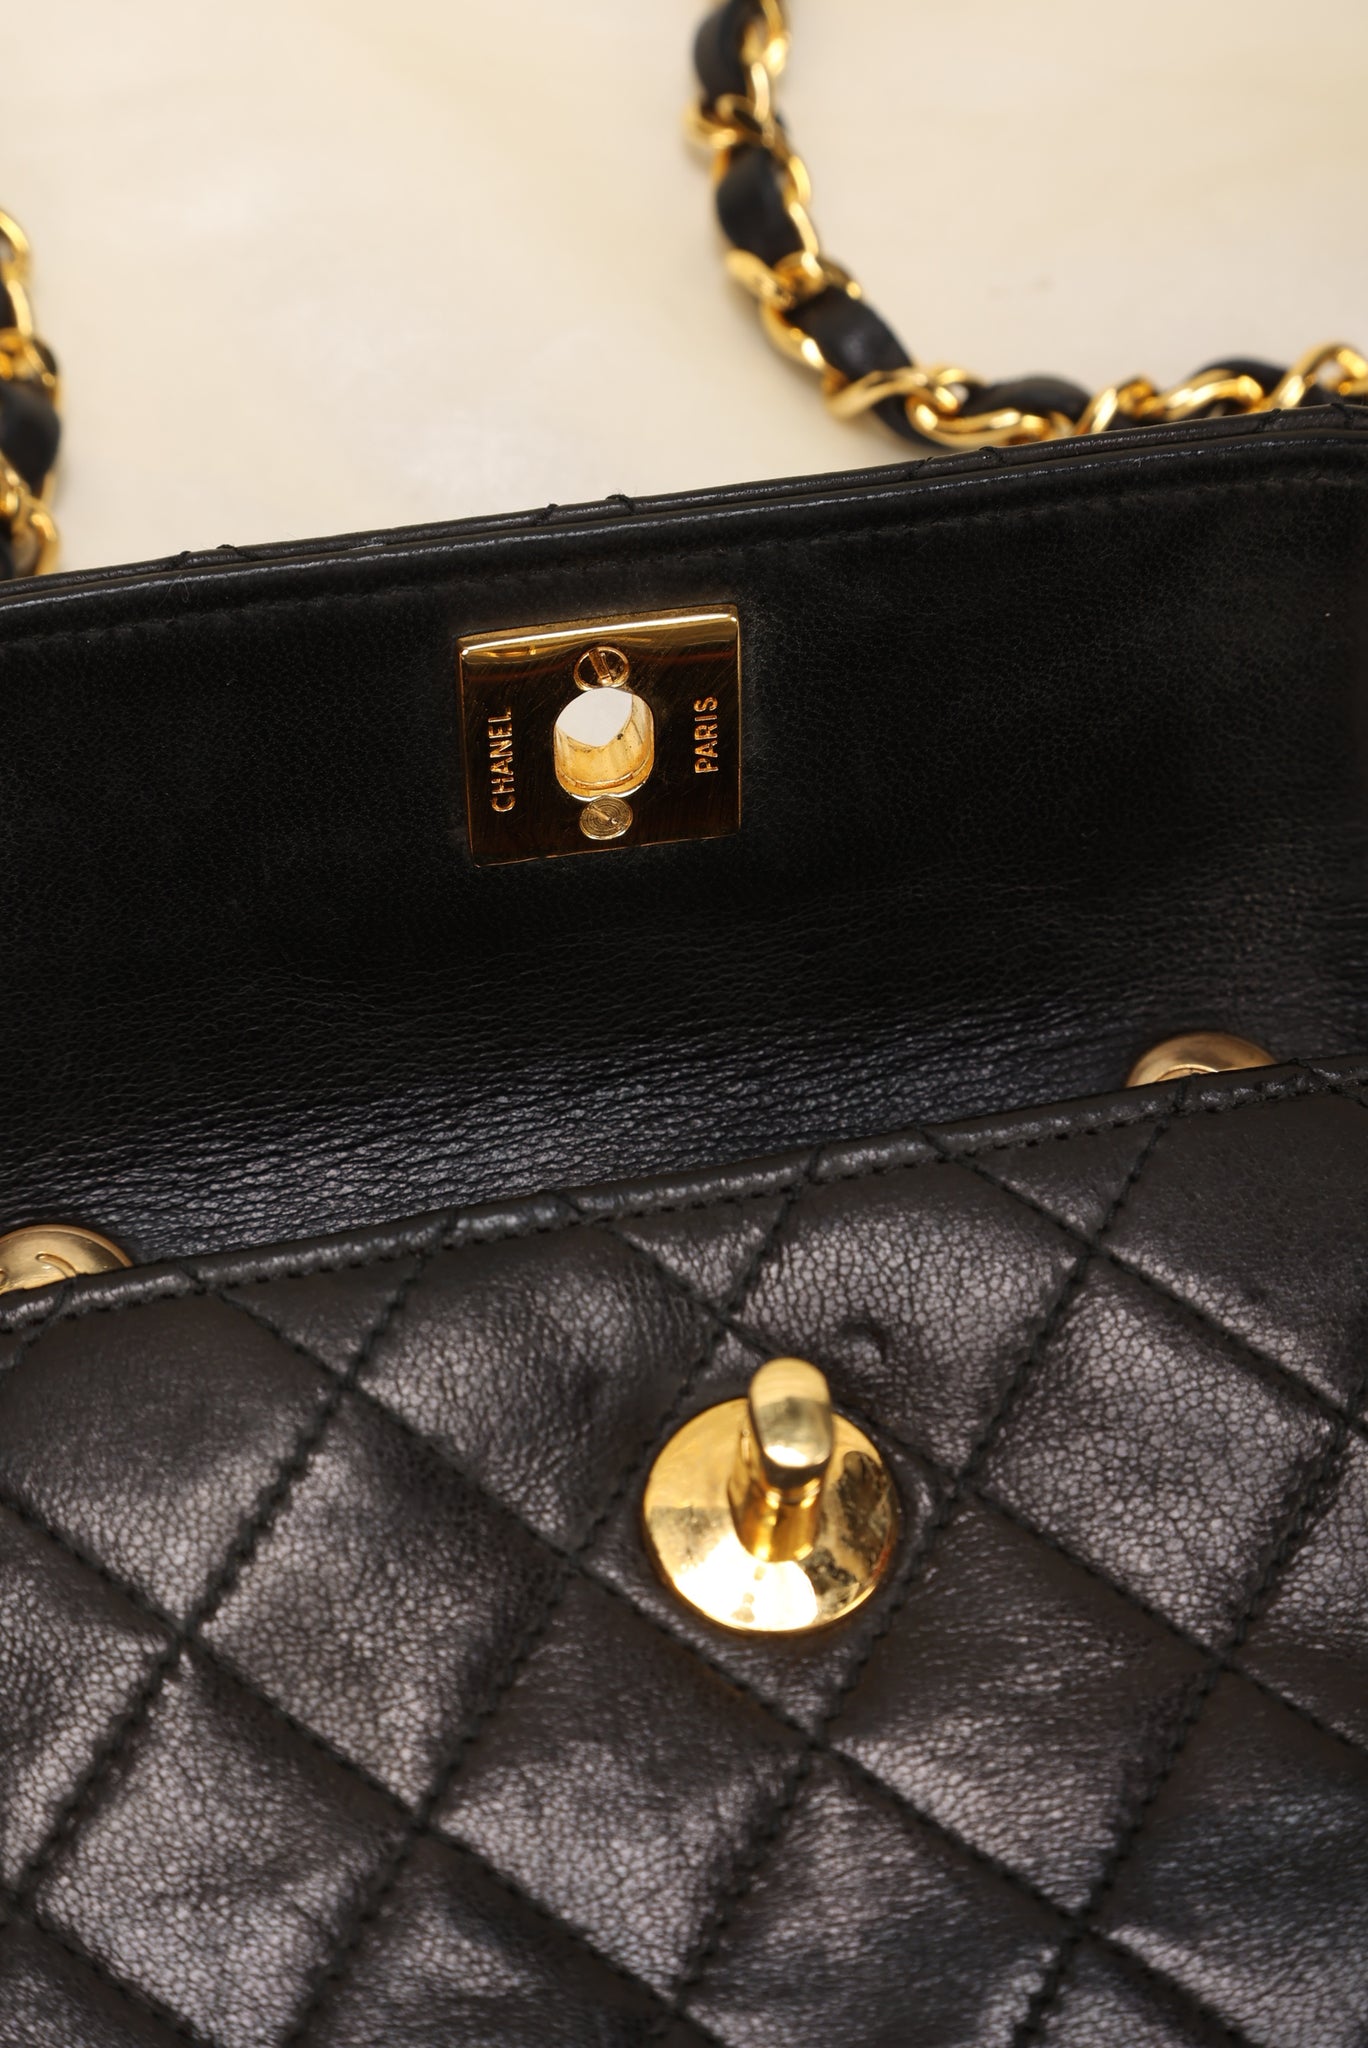 Chanel Lambskin Mini Bag